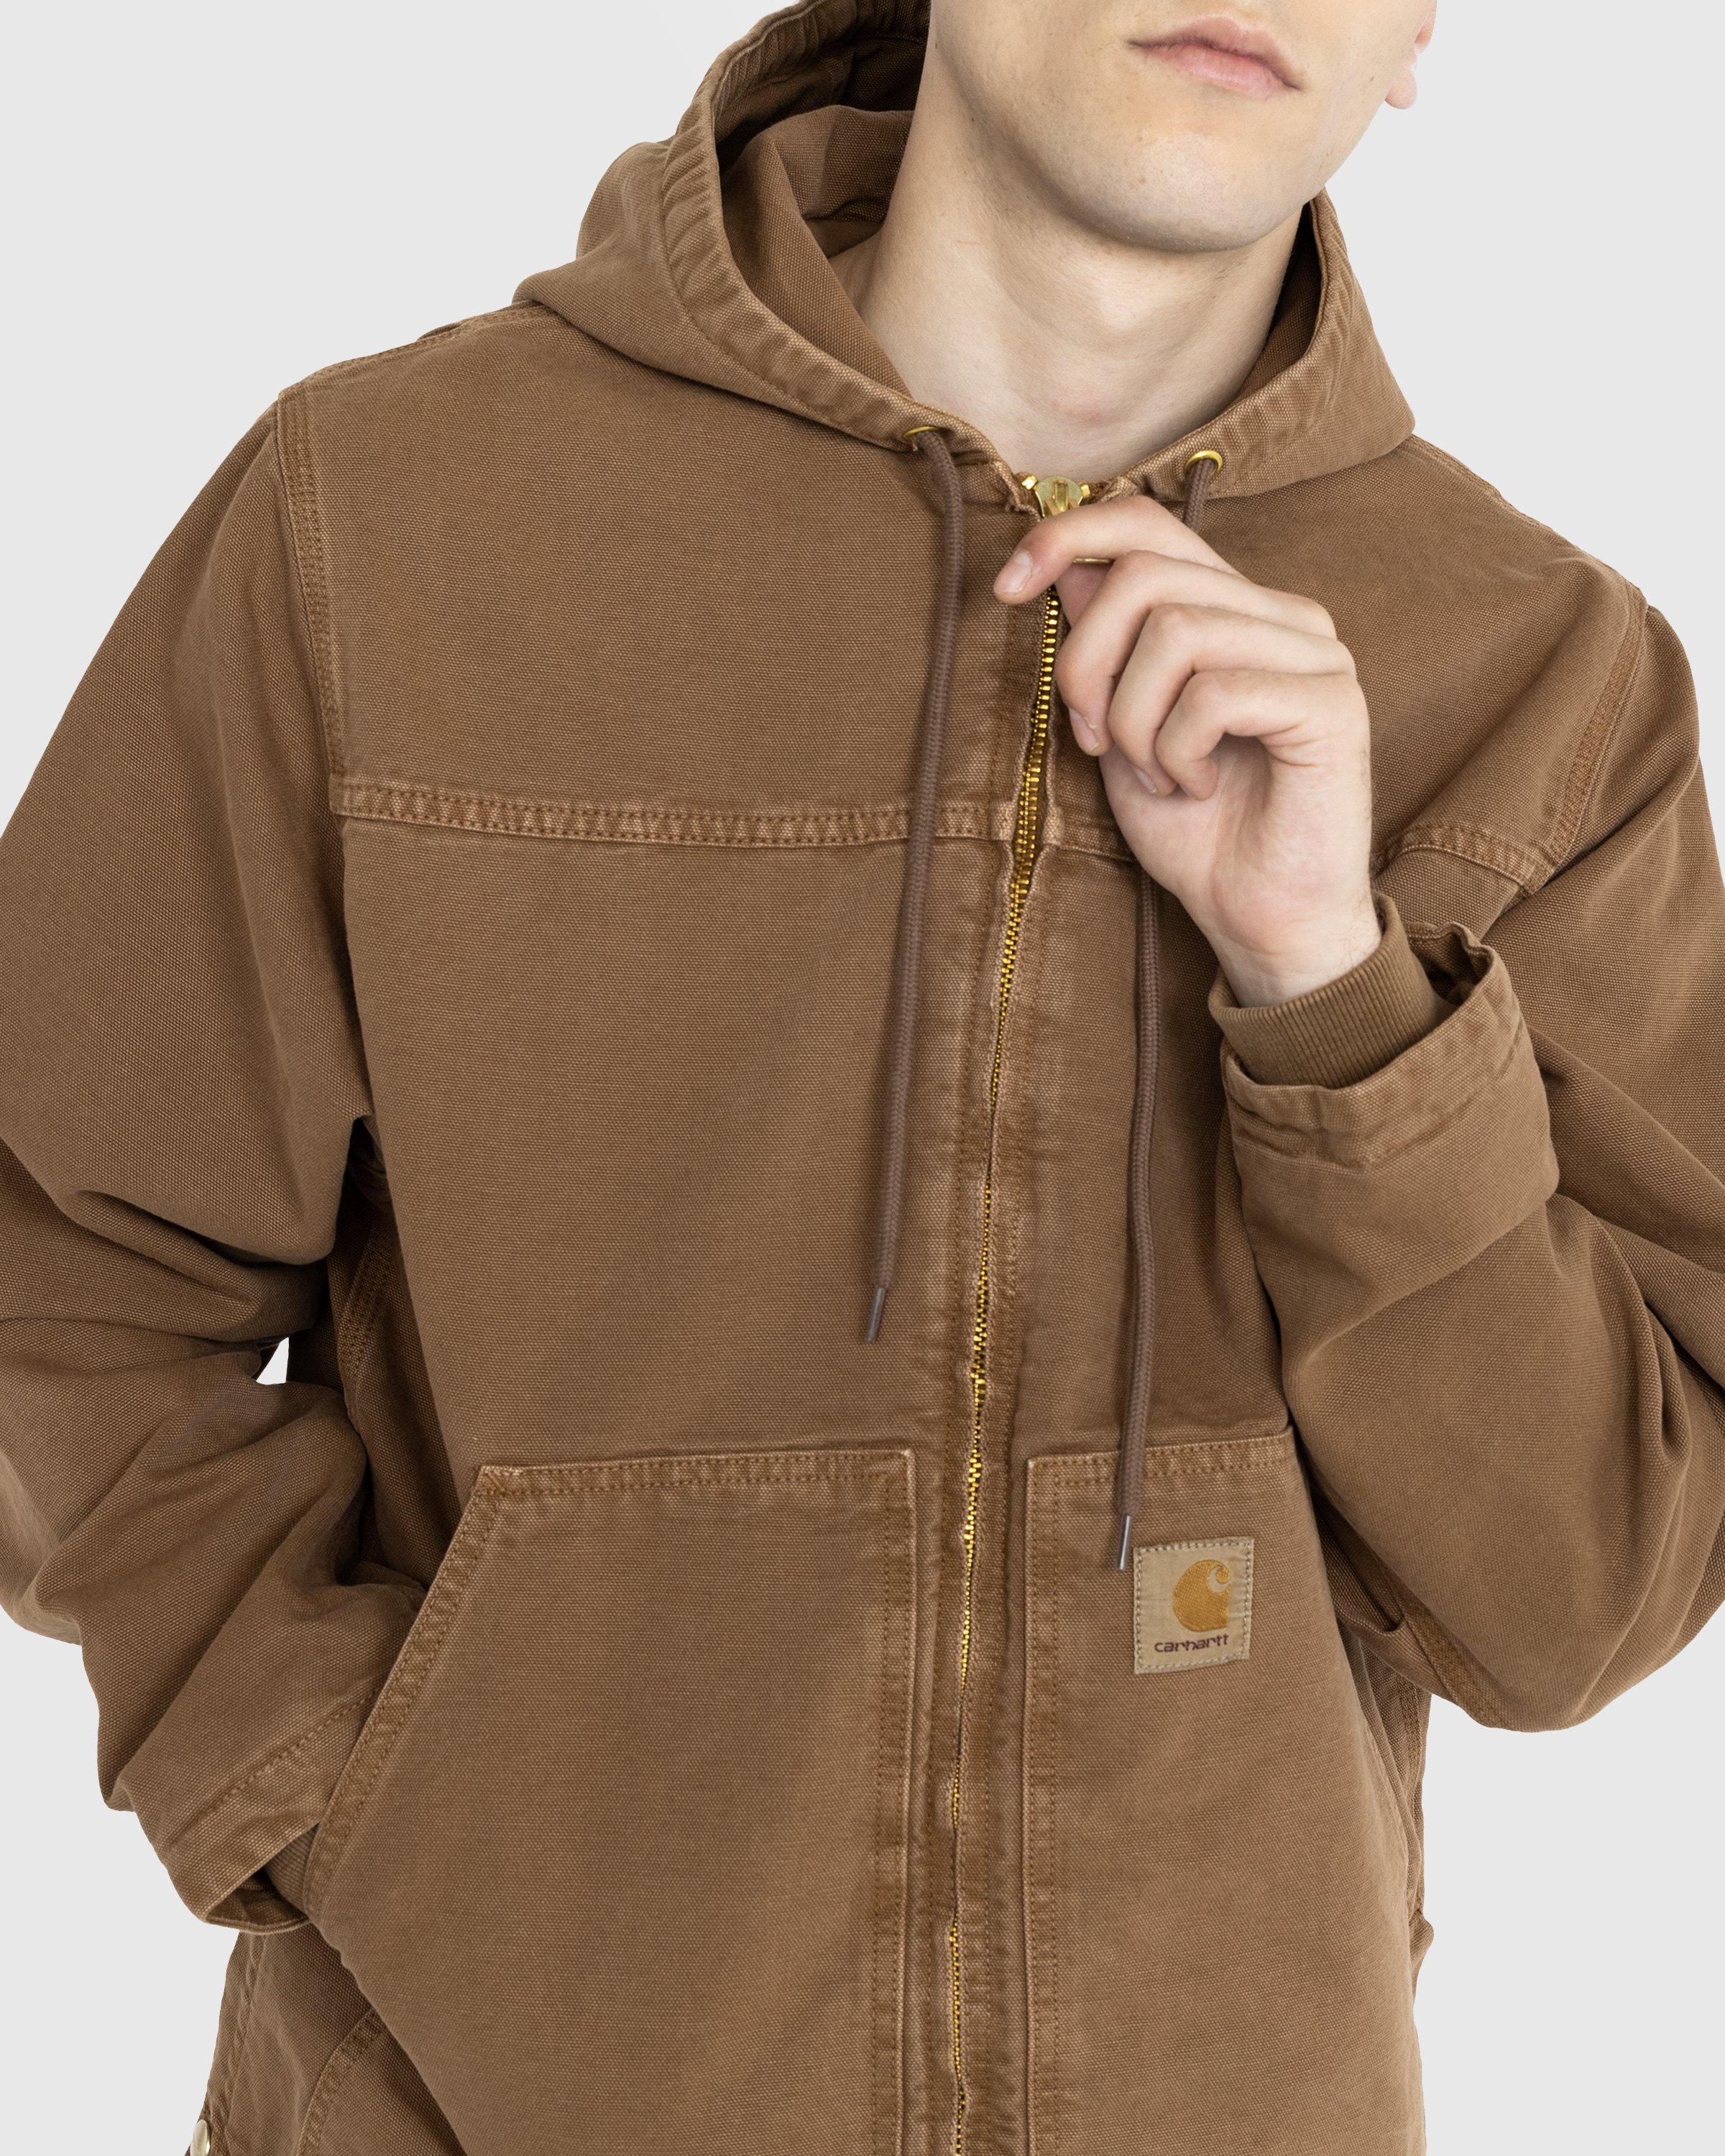 Carhartt WIP - Arling Jacket Faded Tamarind - Clothing - Brown - Image 4